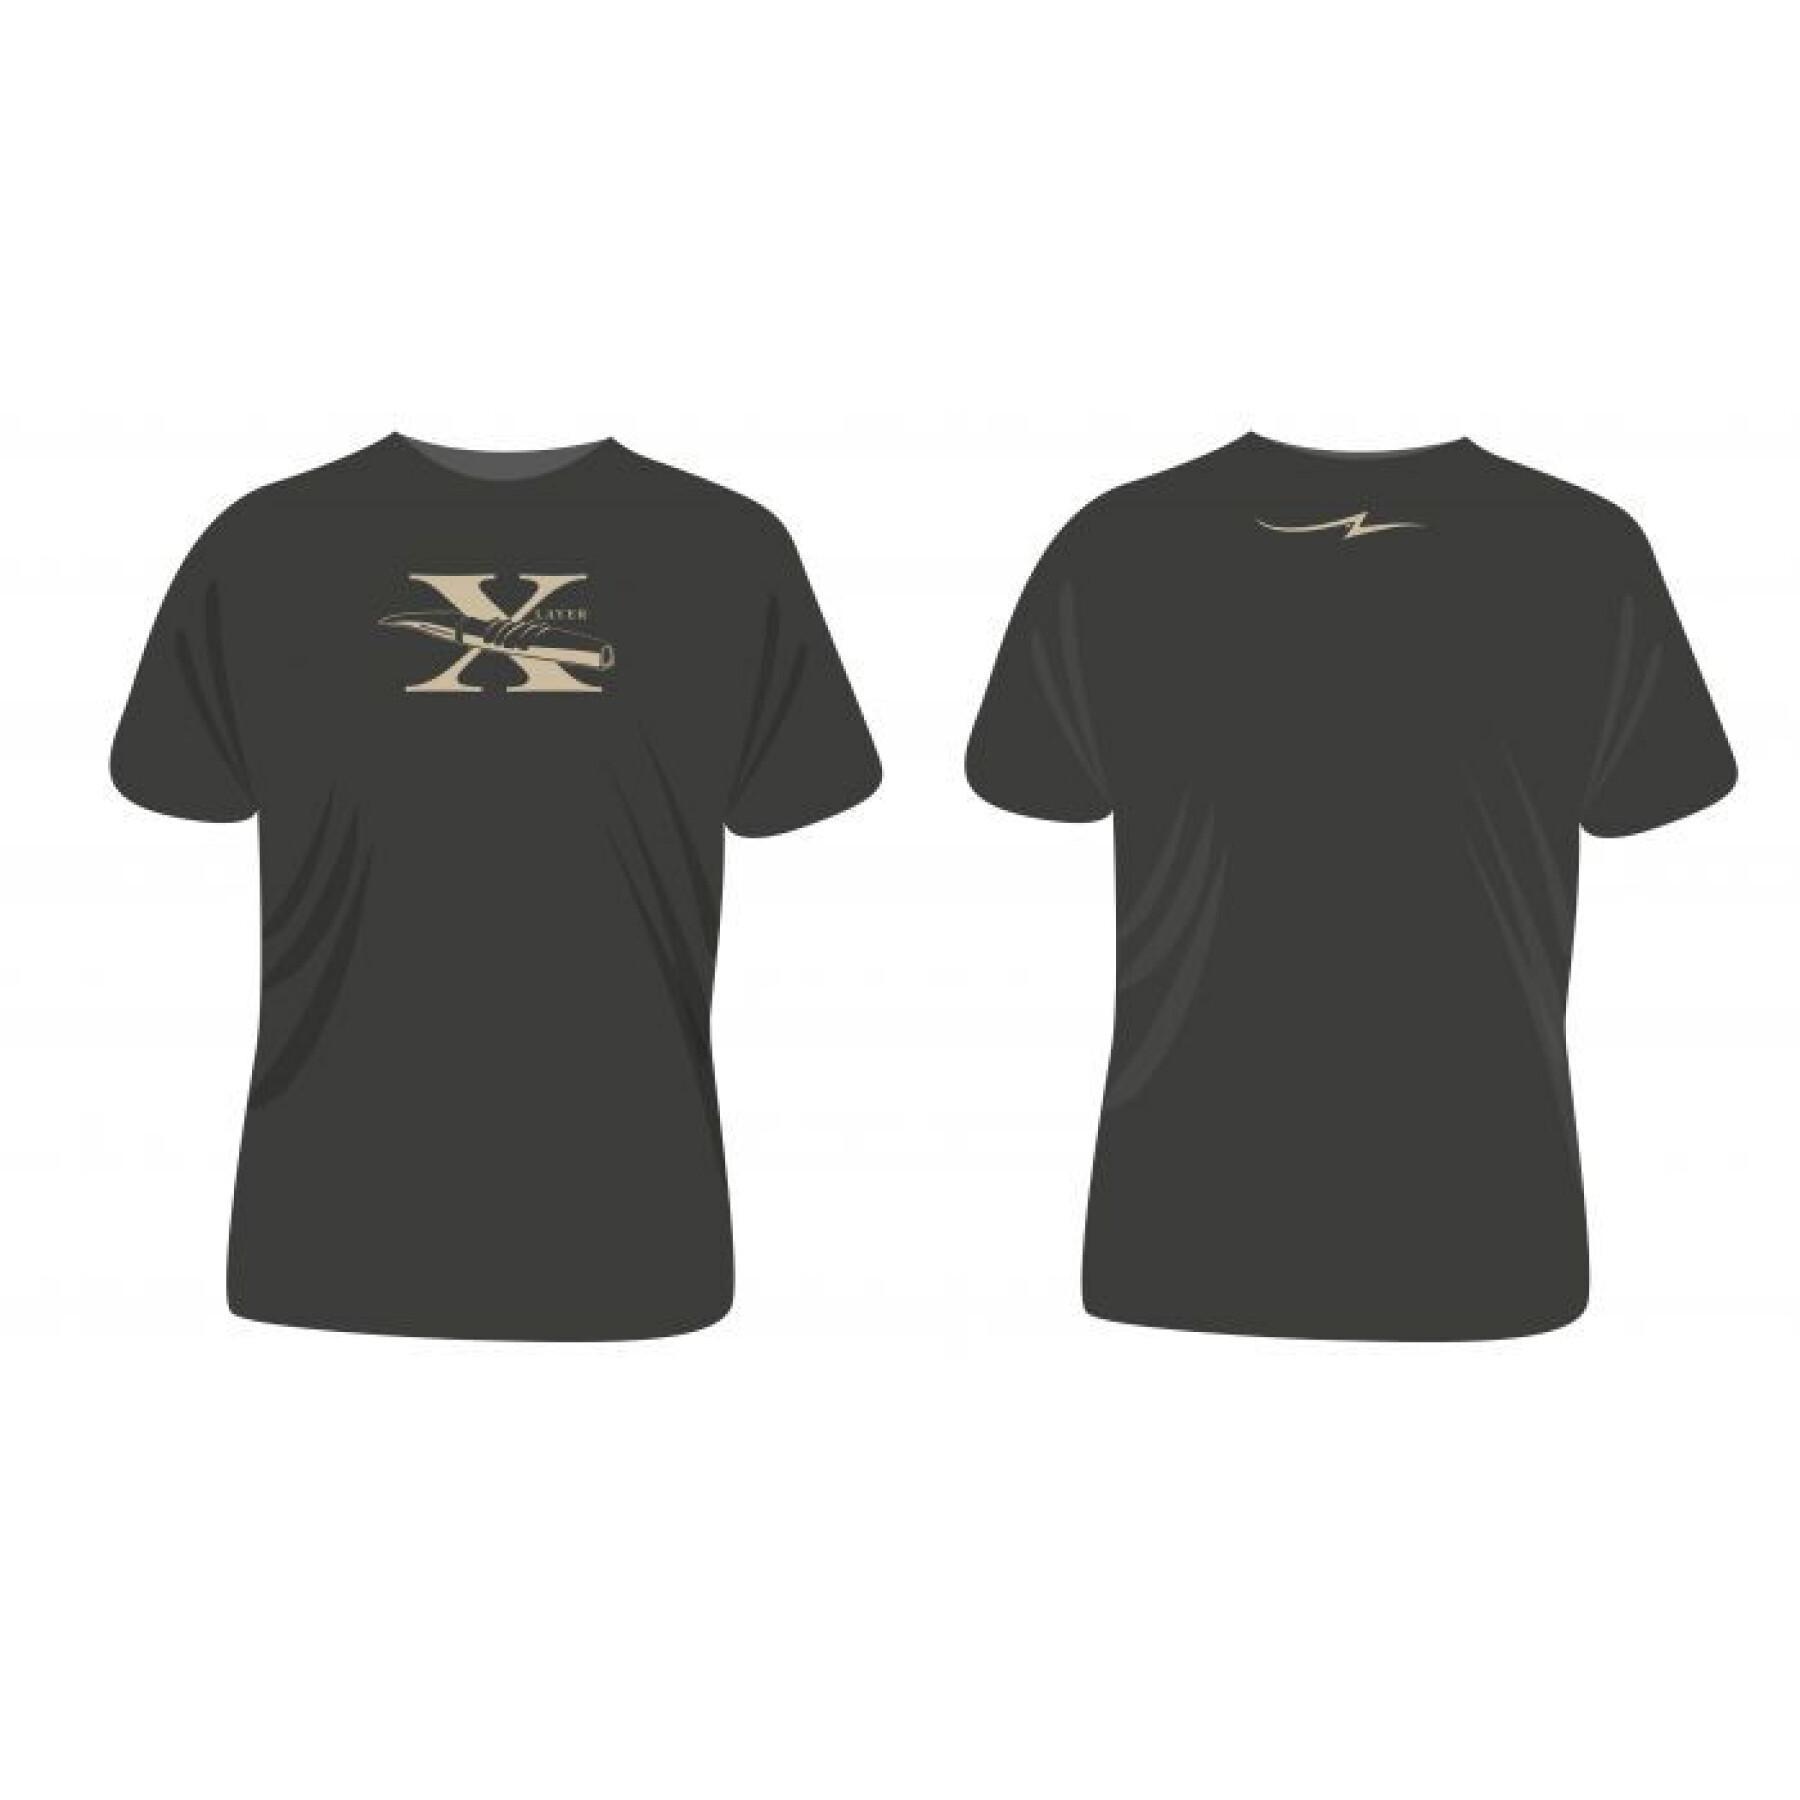 Camiseta Ultimate Fishing X Layer Evo